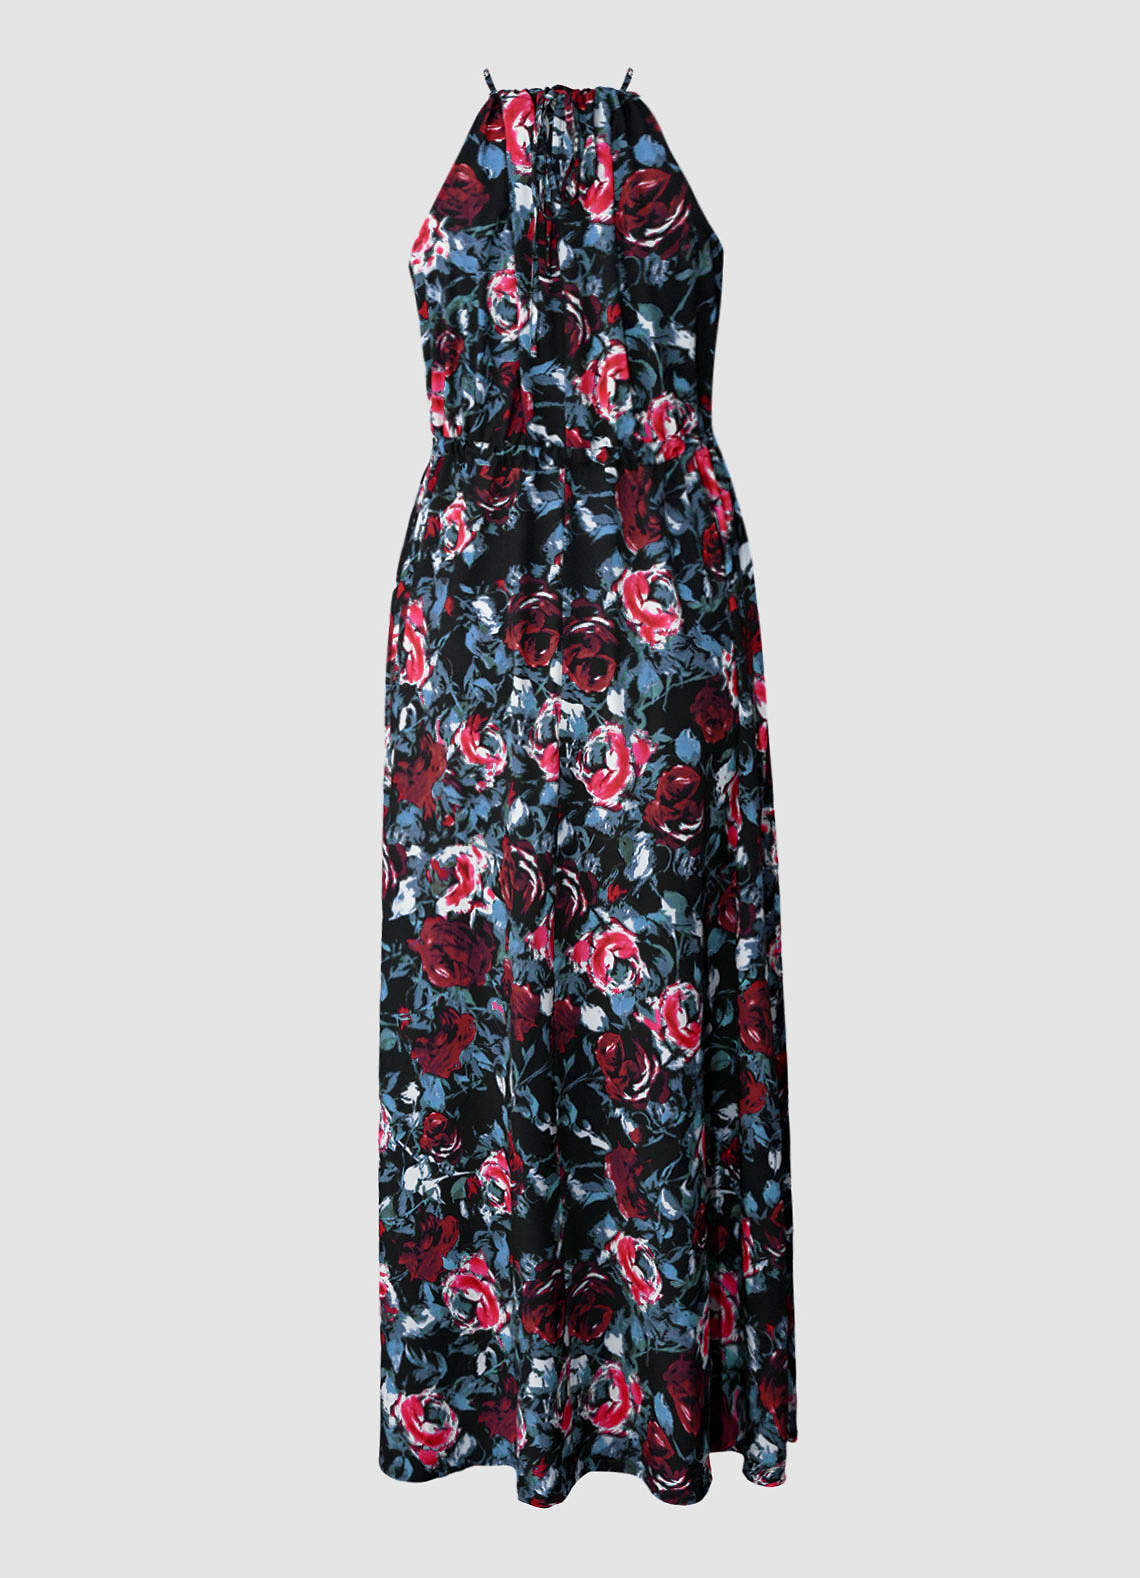 Floral Black Watch Bloom Dresses Print Me Dress Azazie Black Halter Maxi |